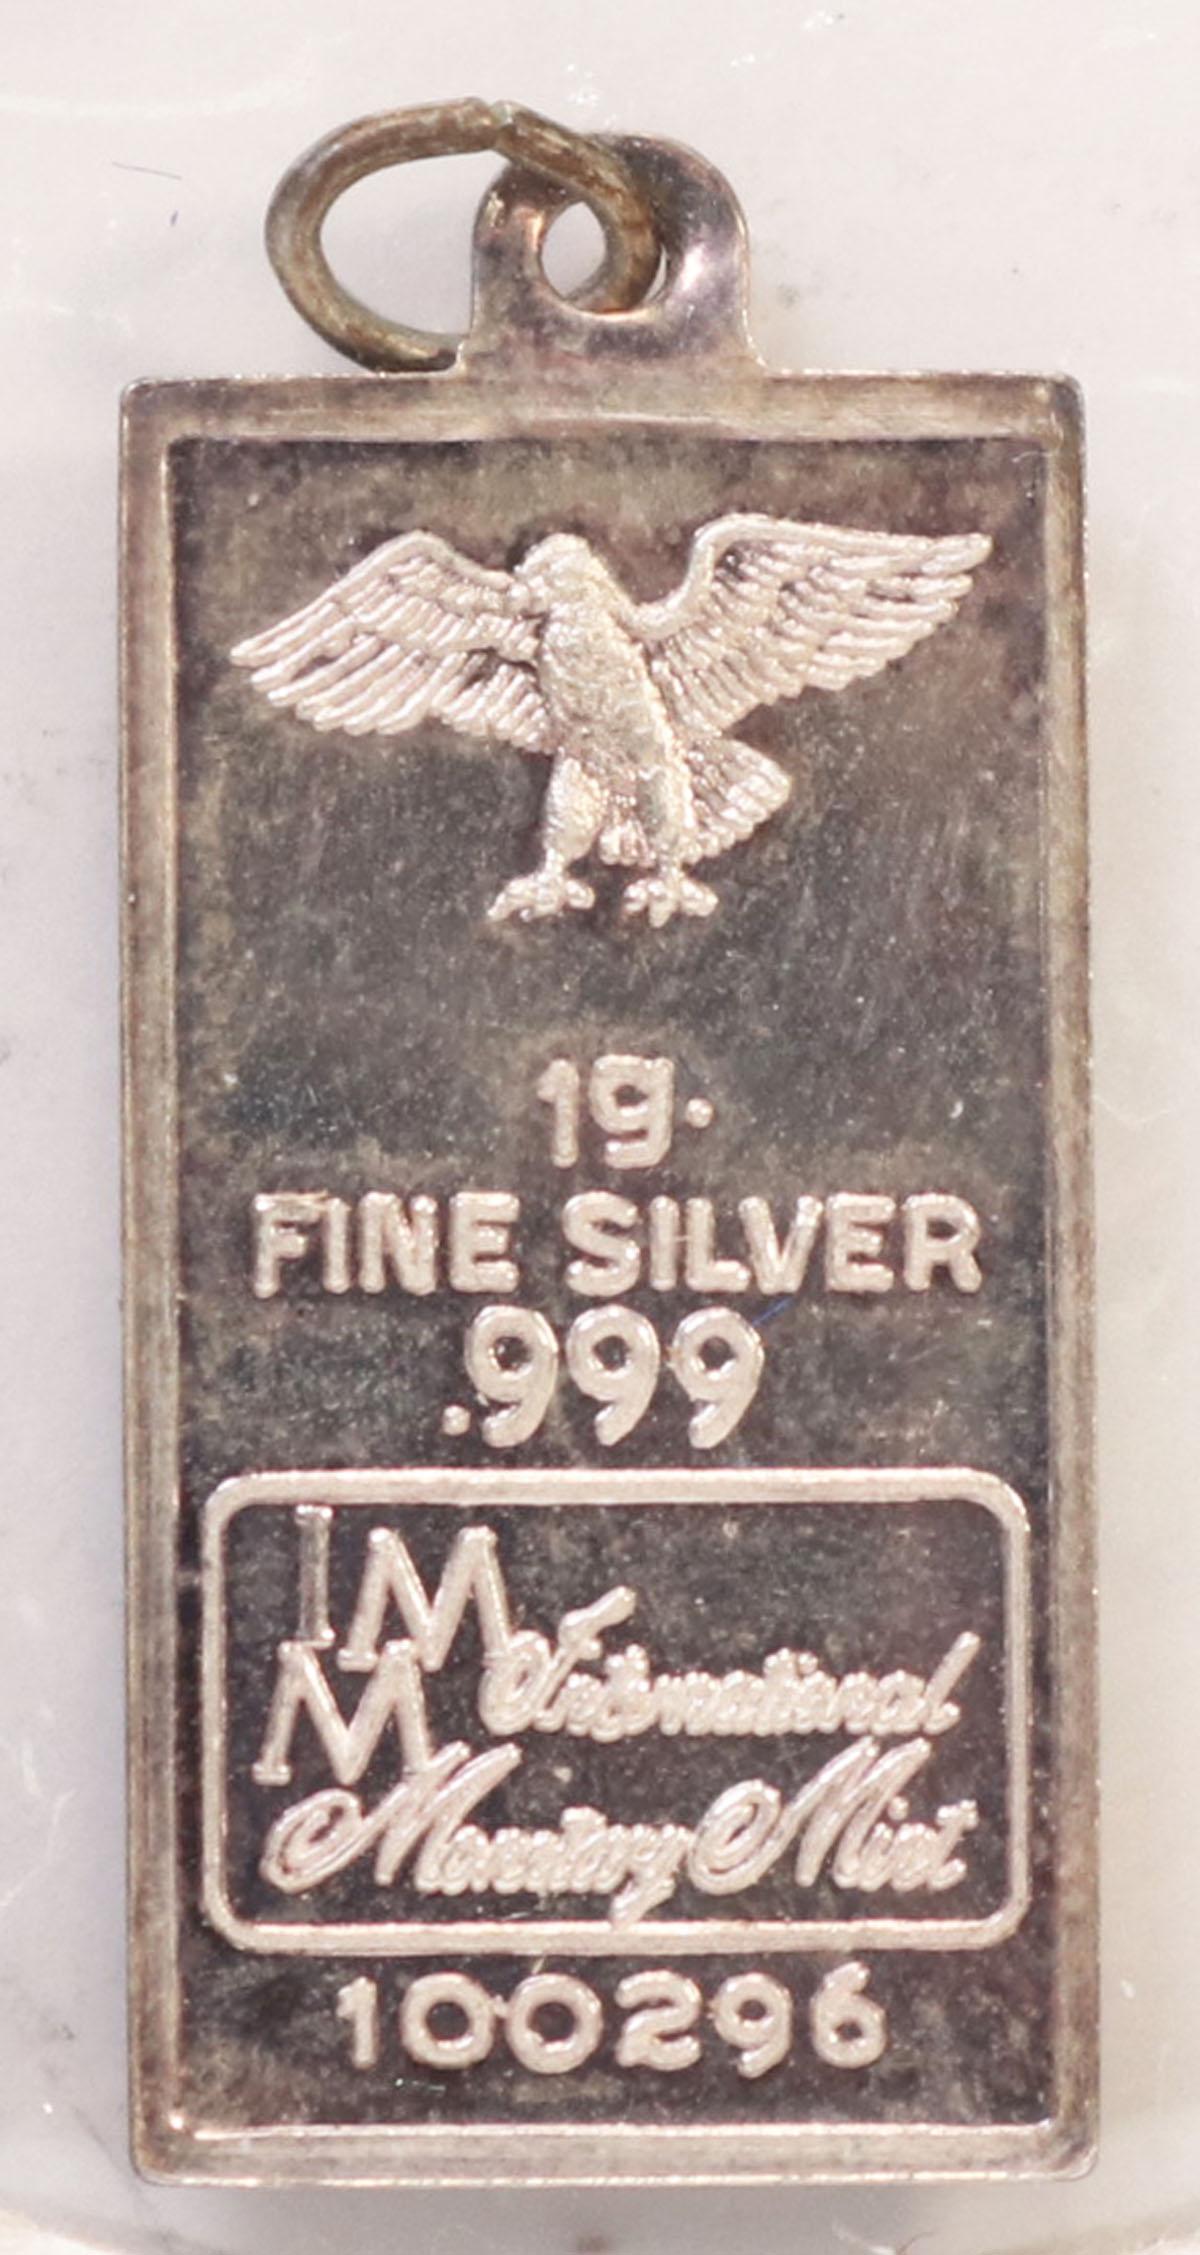 1 Gram.999 Fine Silver Eagle Pendant, International Monetary Mint 100296